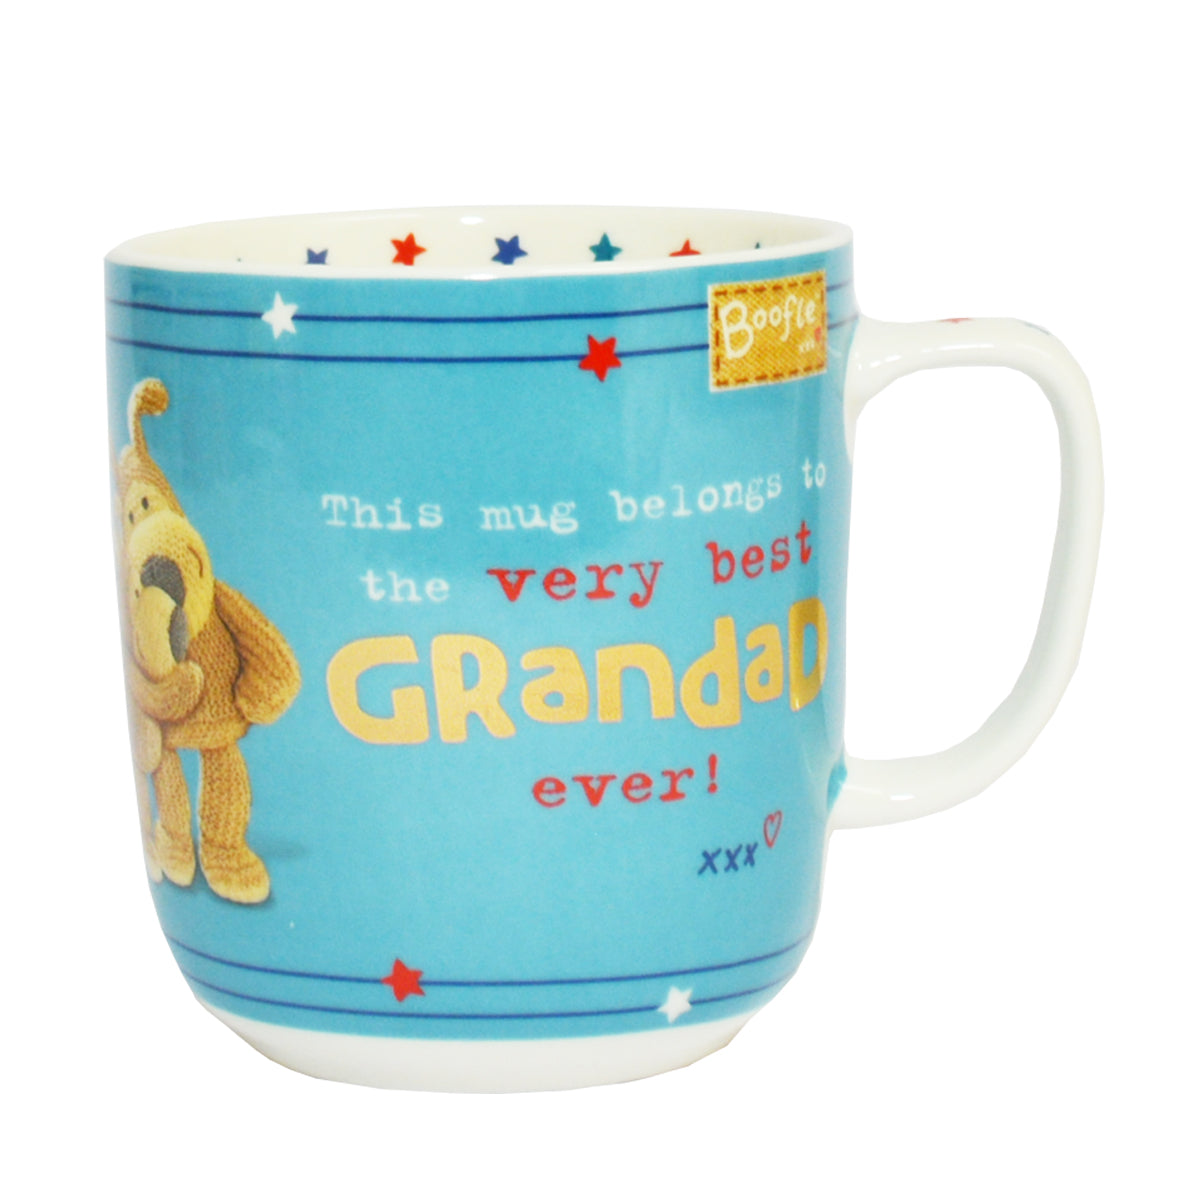 The Very Best Grandad Ever! Boofle Mug In Gift Box